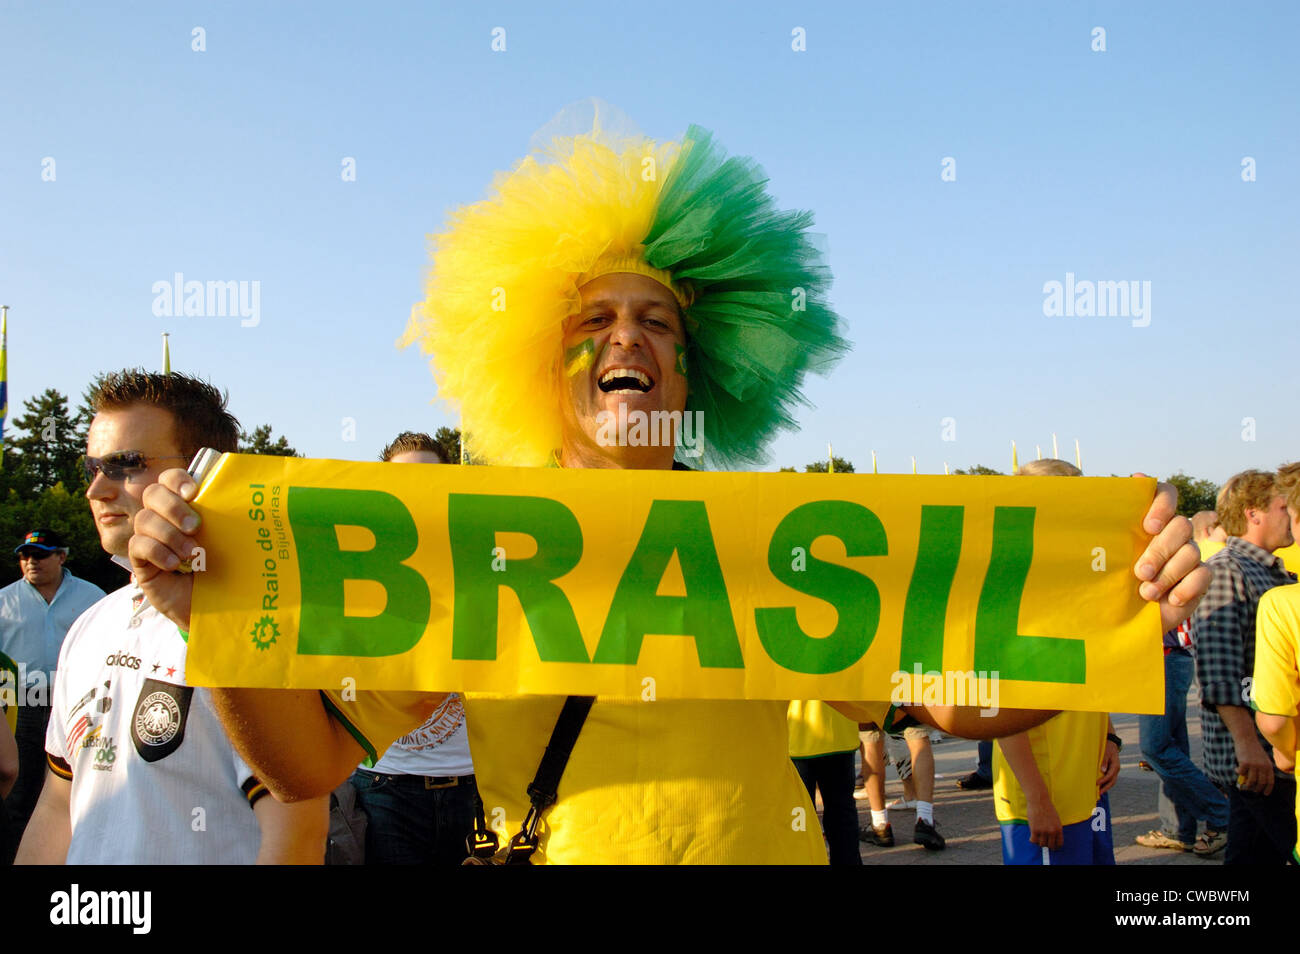 WM - Brazilian football Stock Photo